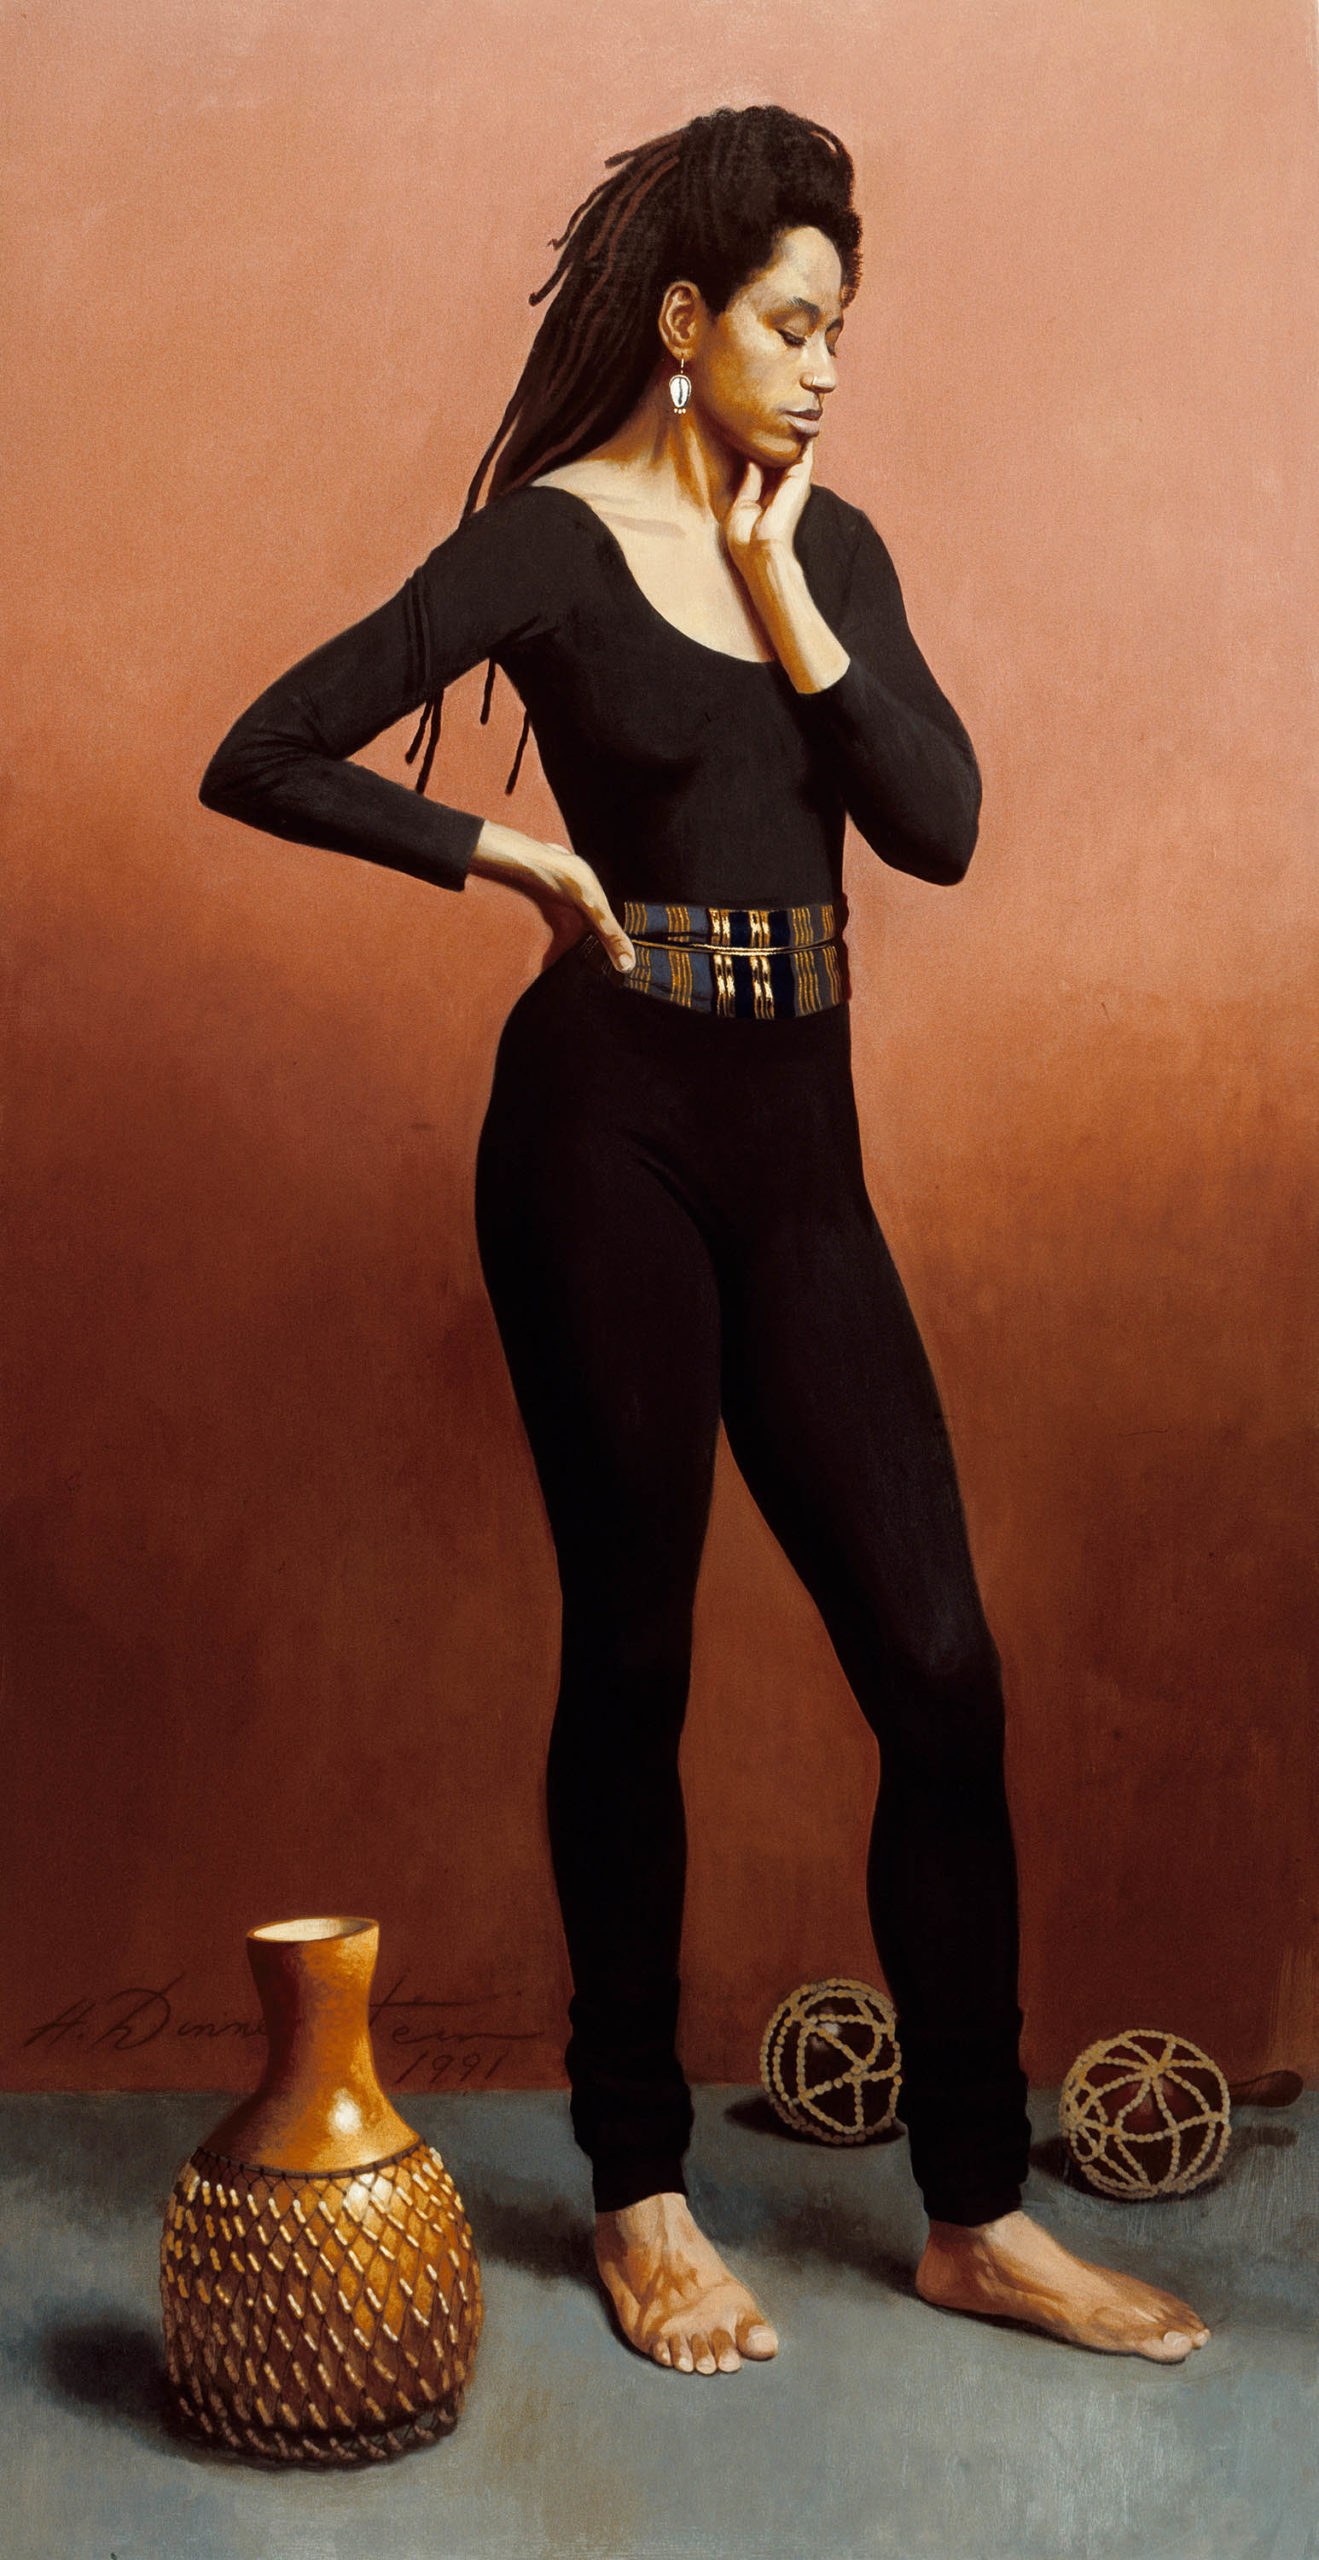 
		                					Harvey Dinnerstein		                																	
																											<i>The Dancer (Asma Feyyinmi),</i>  
																																								1991, 
																																								oil on canvas, 
																																								78 1/2 x 40 inches 
																								
		                				